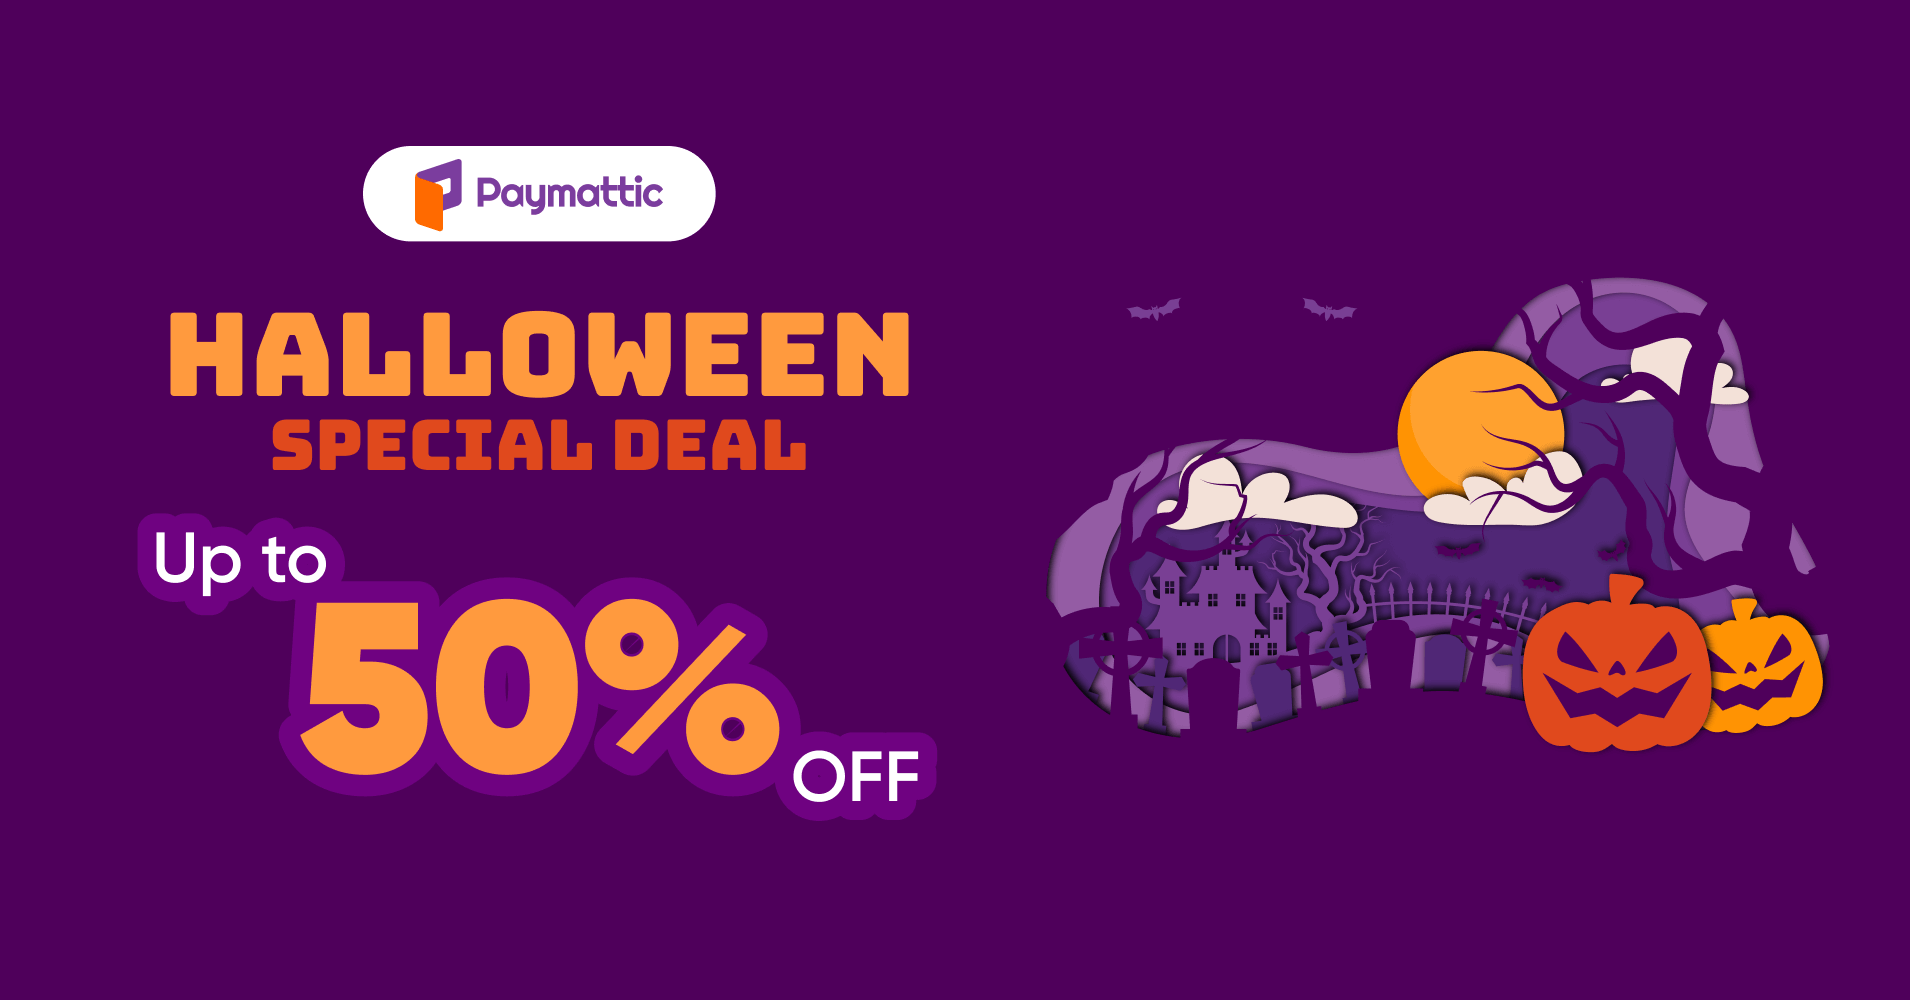 Paymattic halloween deal